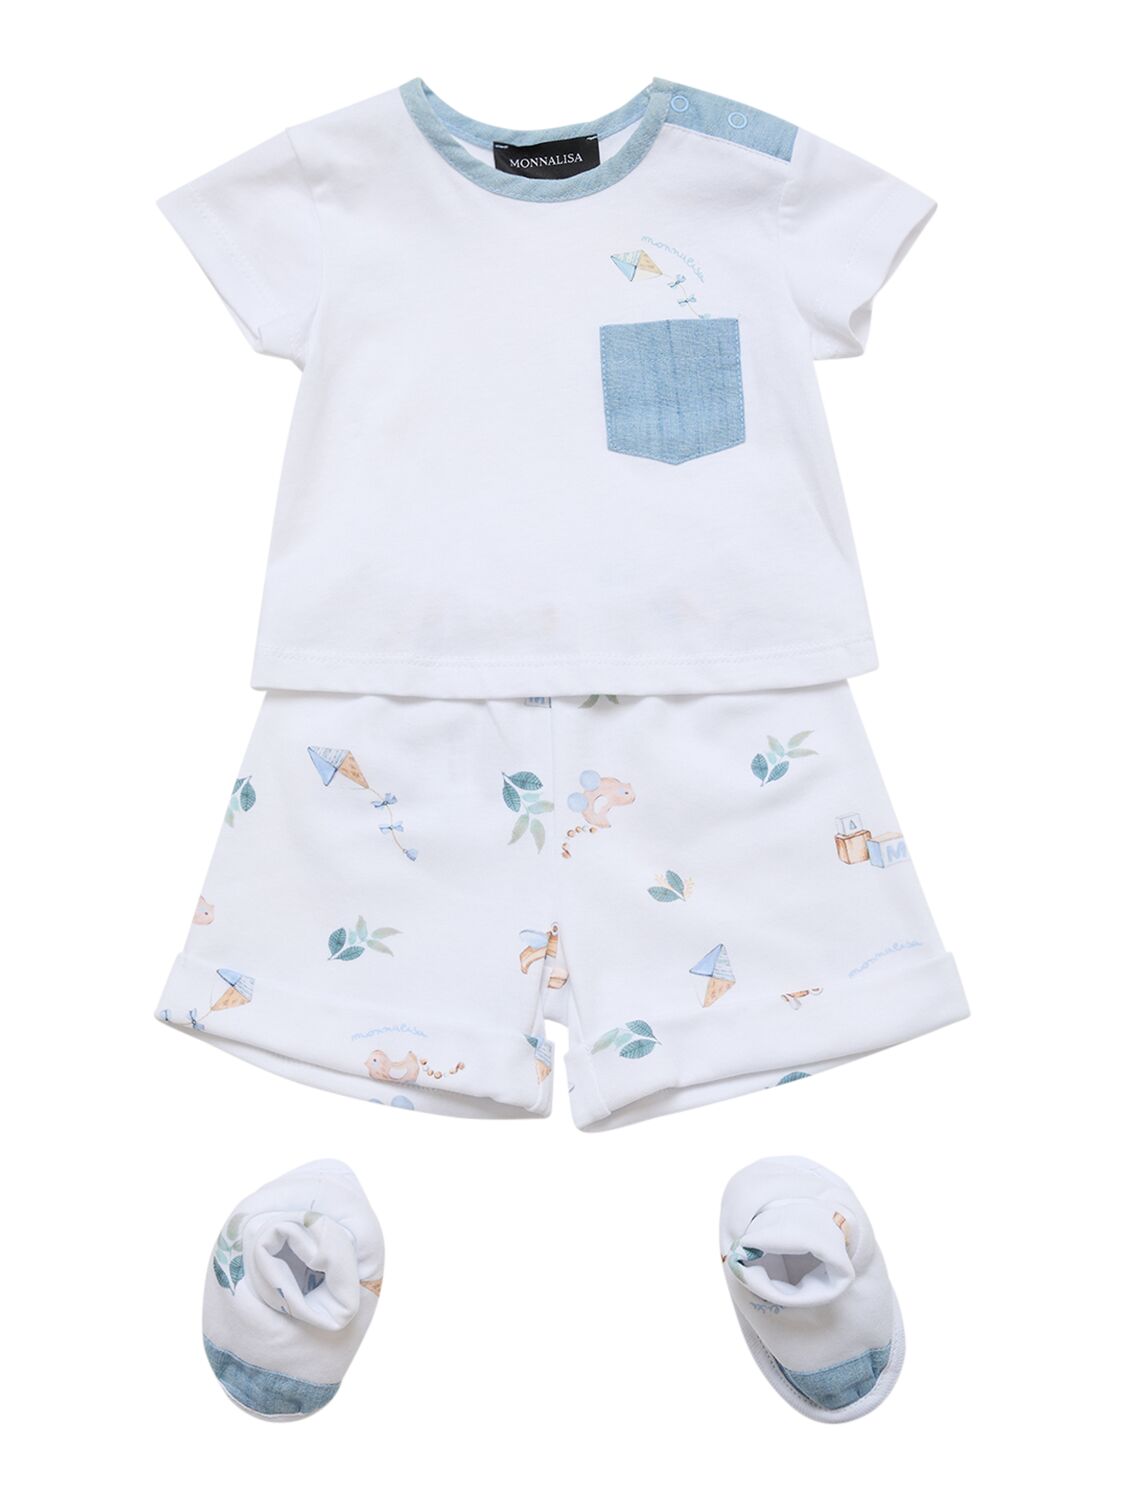 Monnalisa Babies' Cotton Jersey T-shirt, Shorts And Socks In White